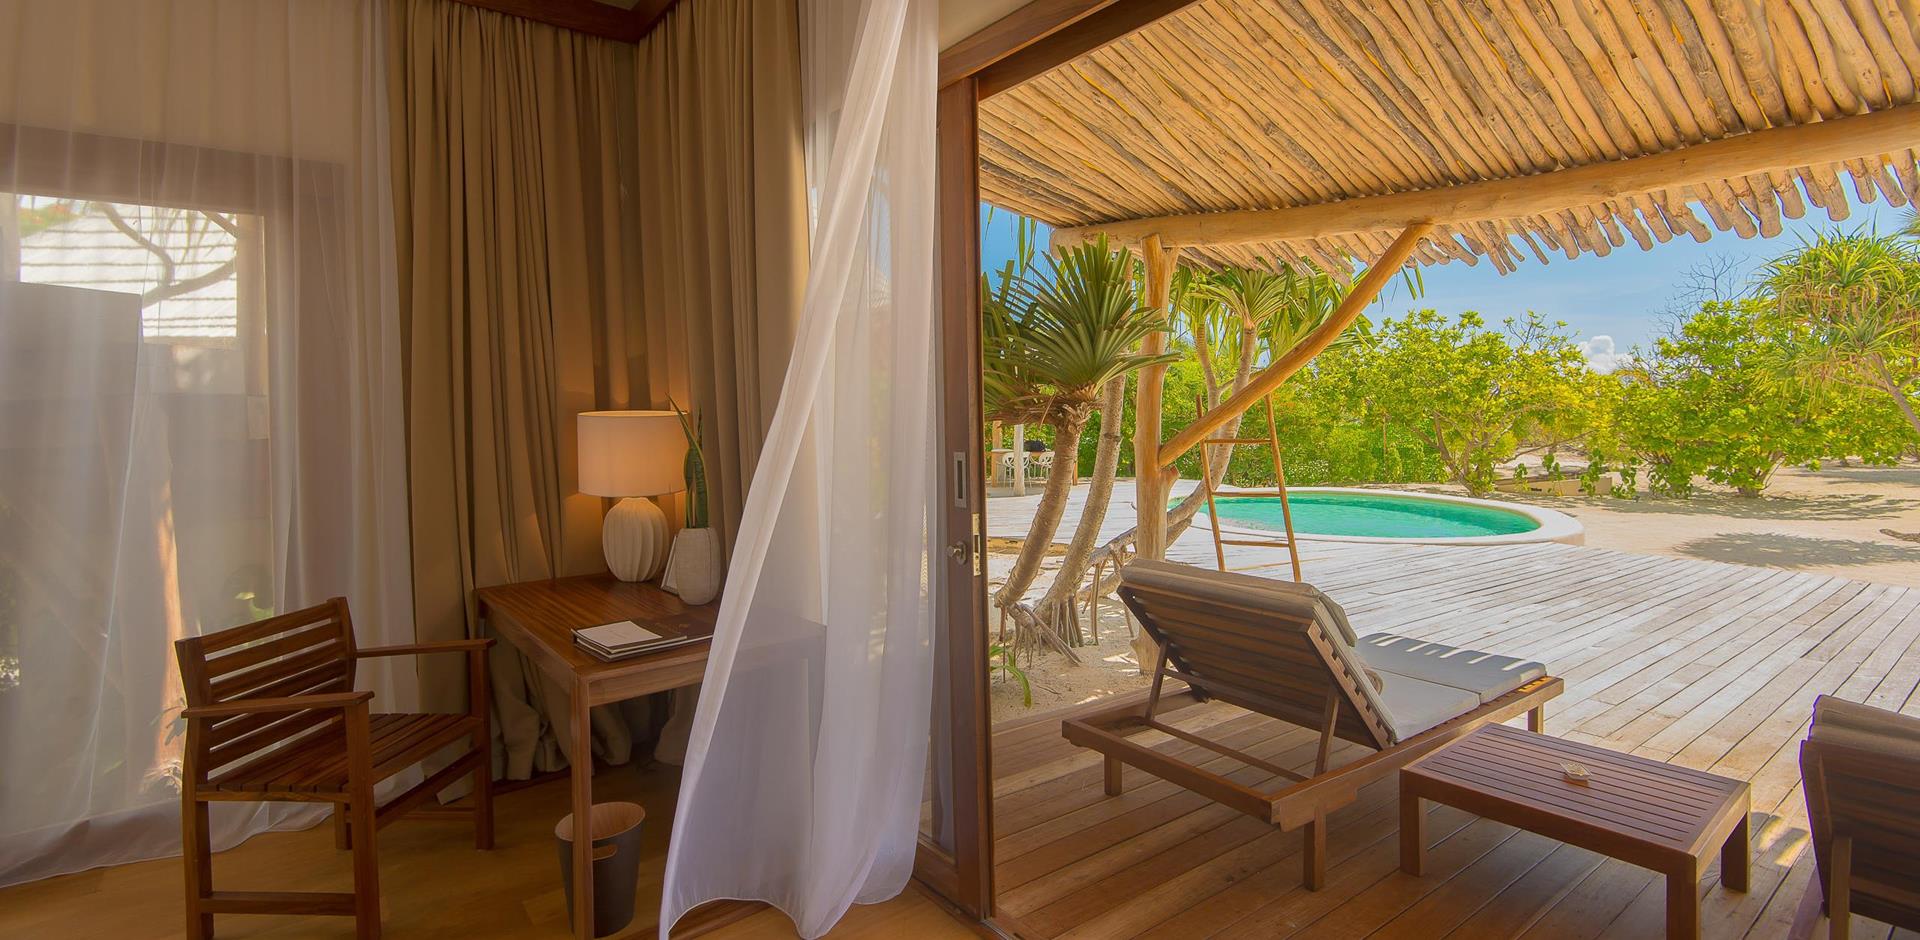 Decking, Zanzibar White Sand Luxury Villas & Spa, Tanzania, A&K